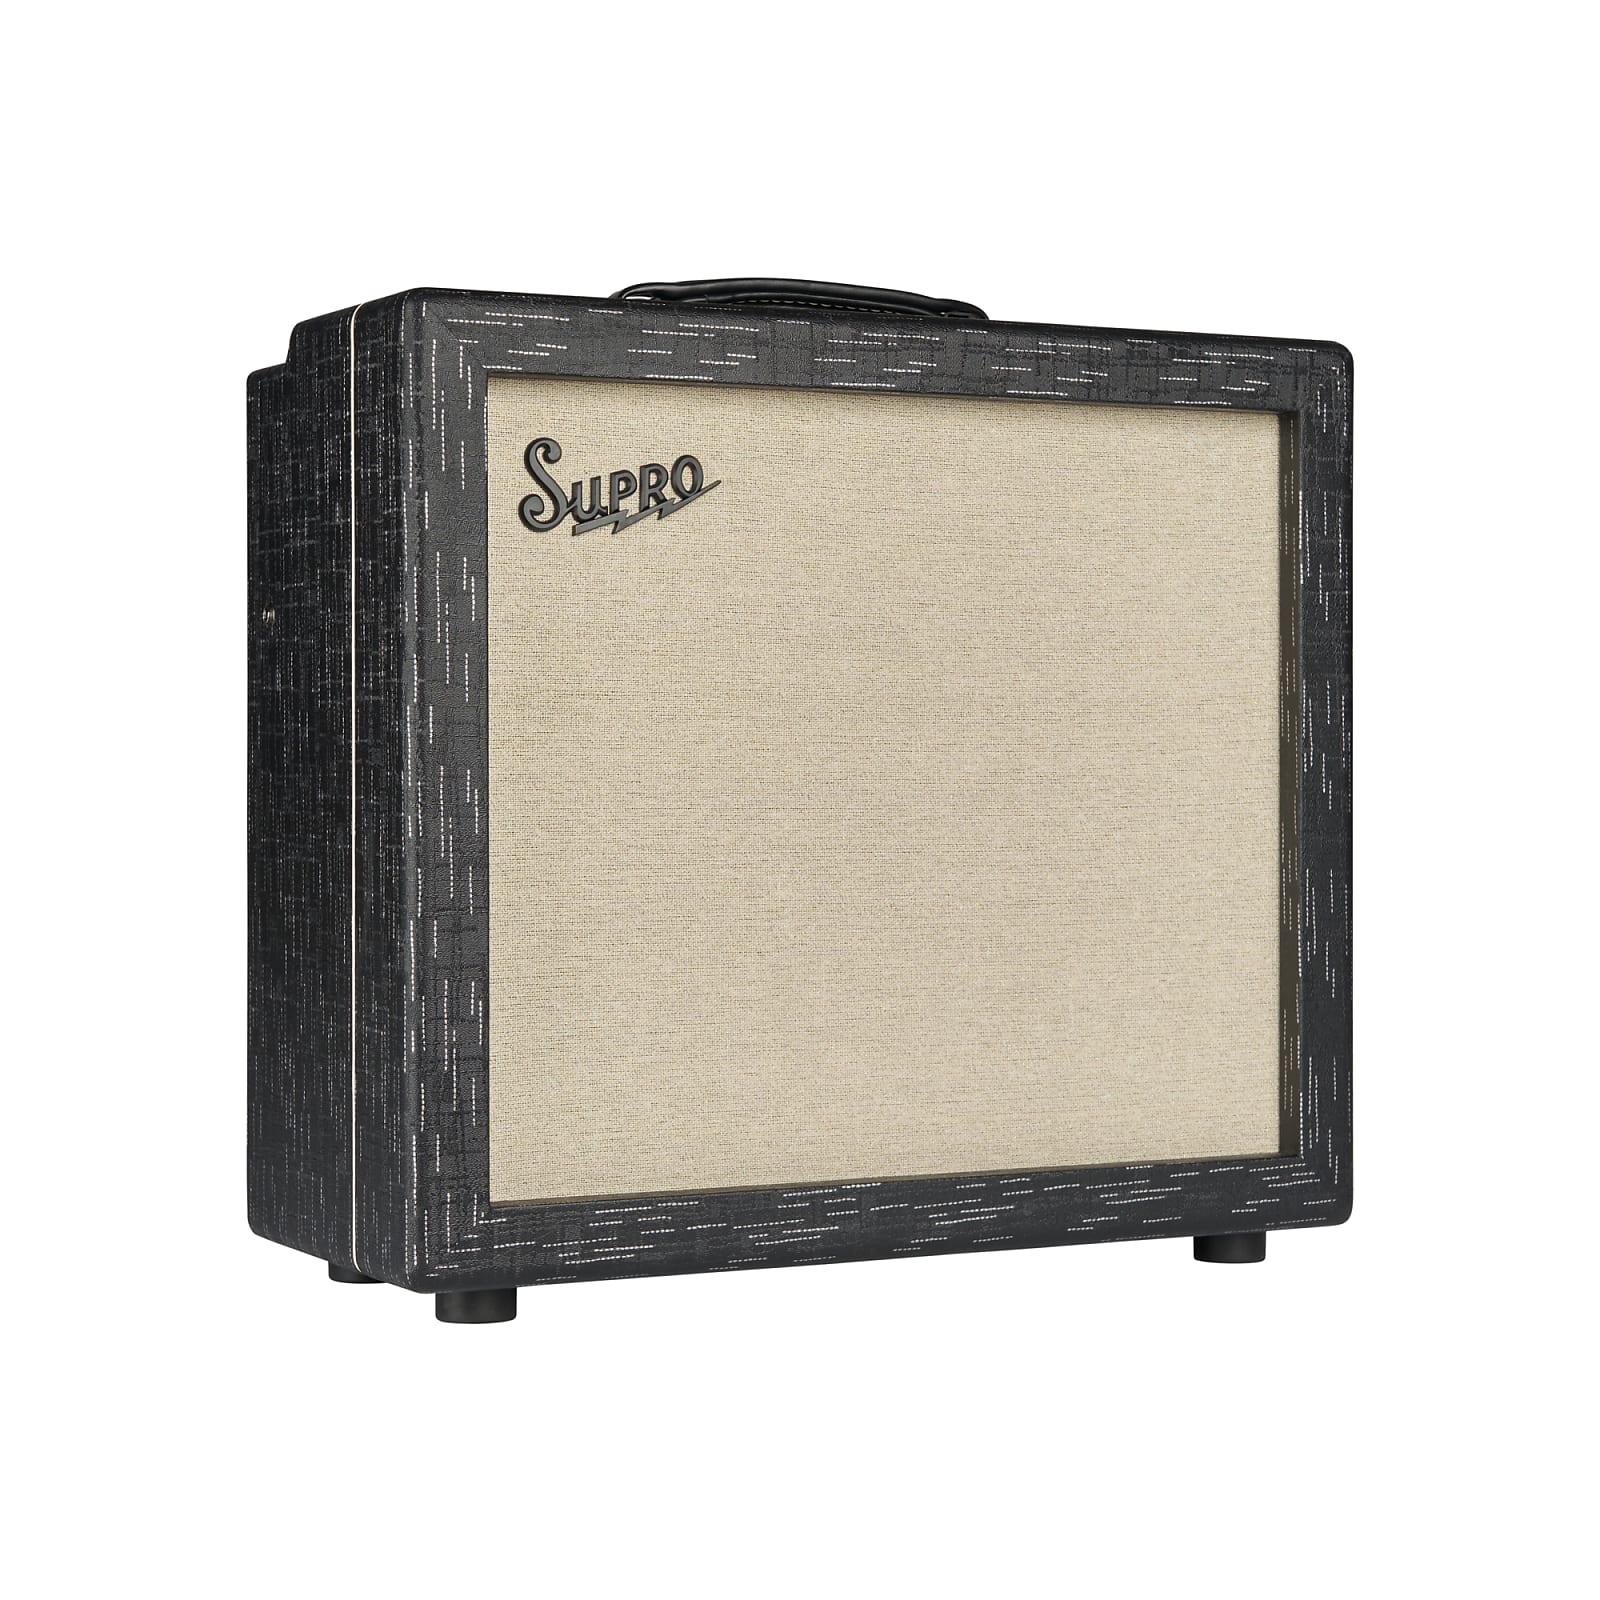 Supro 1932r Royale 112 Combo 50w 1x12 - Combo amplificador para guitarra eléctrica - Variation 1